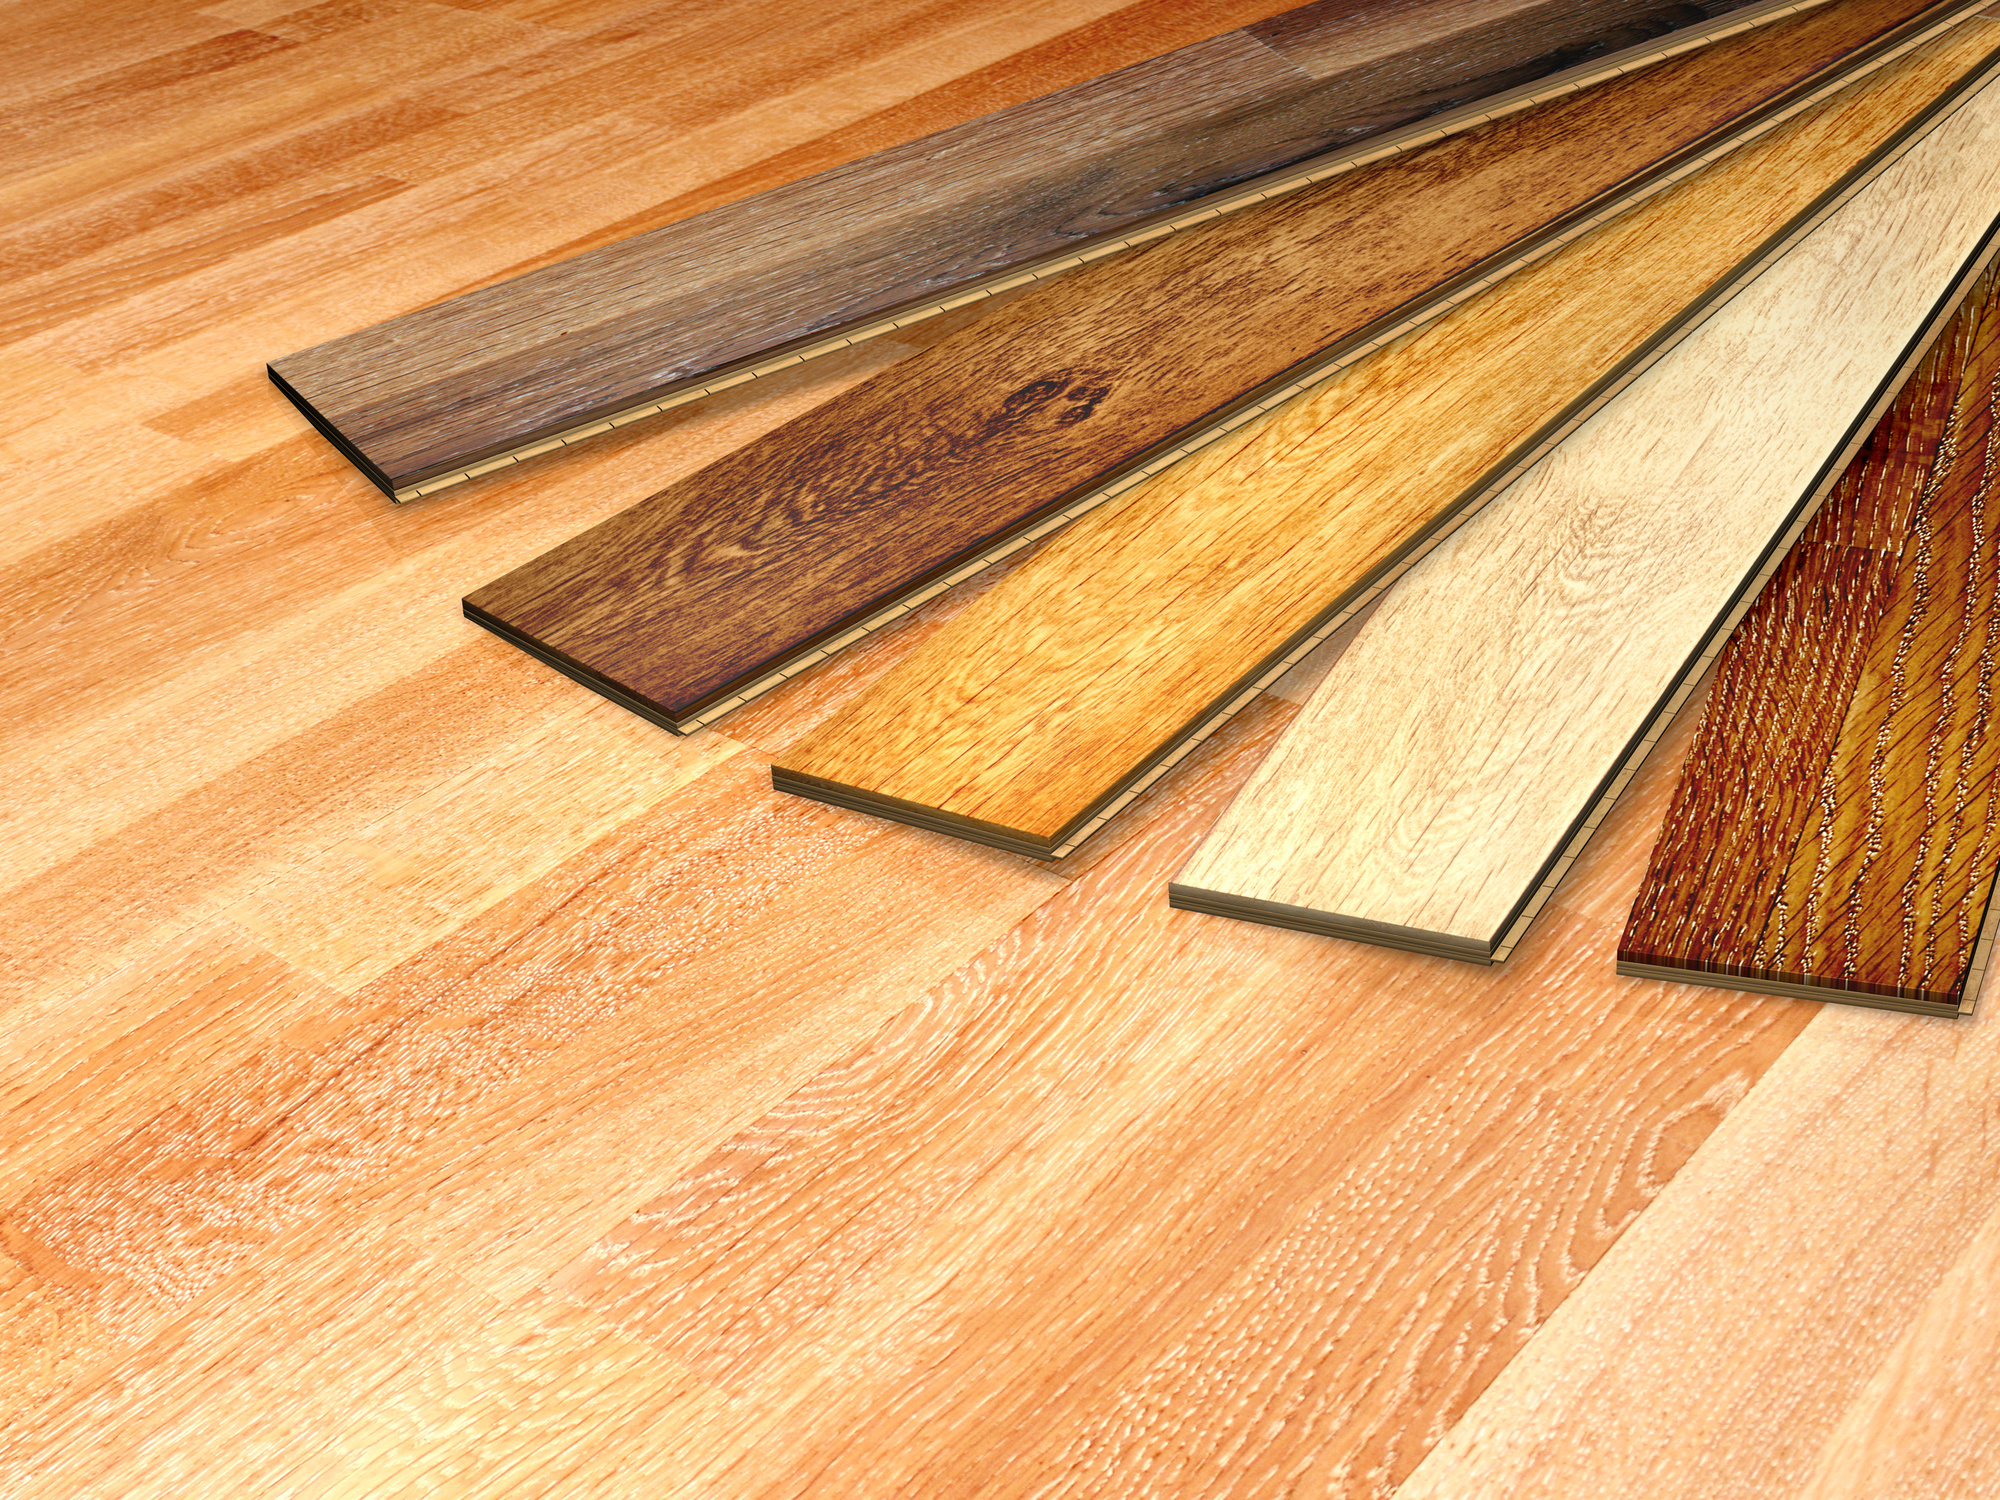 Installing Wood Floors